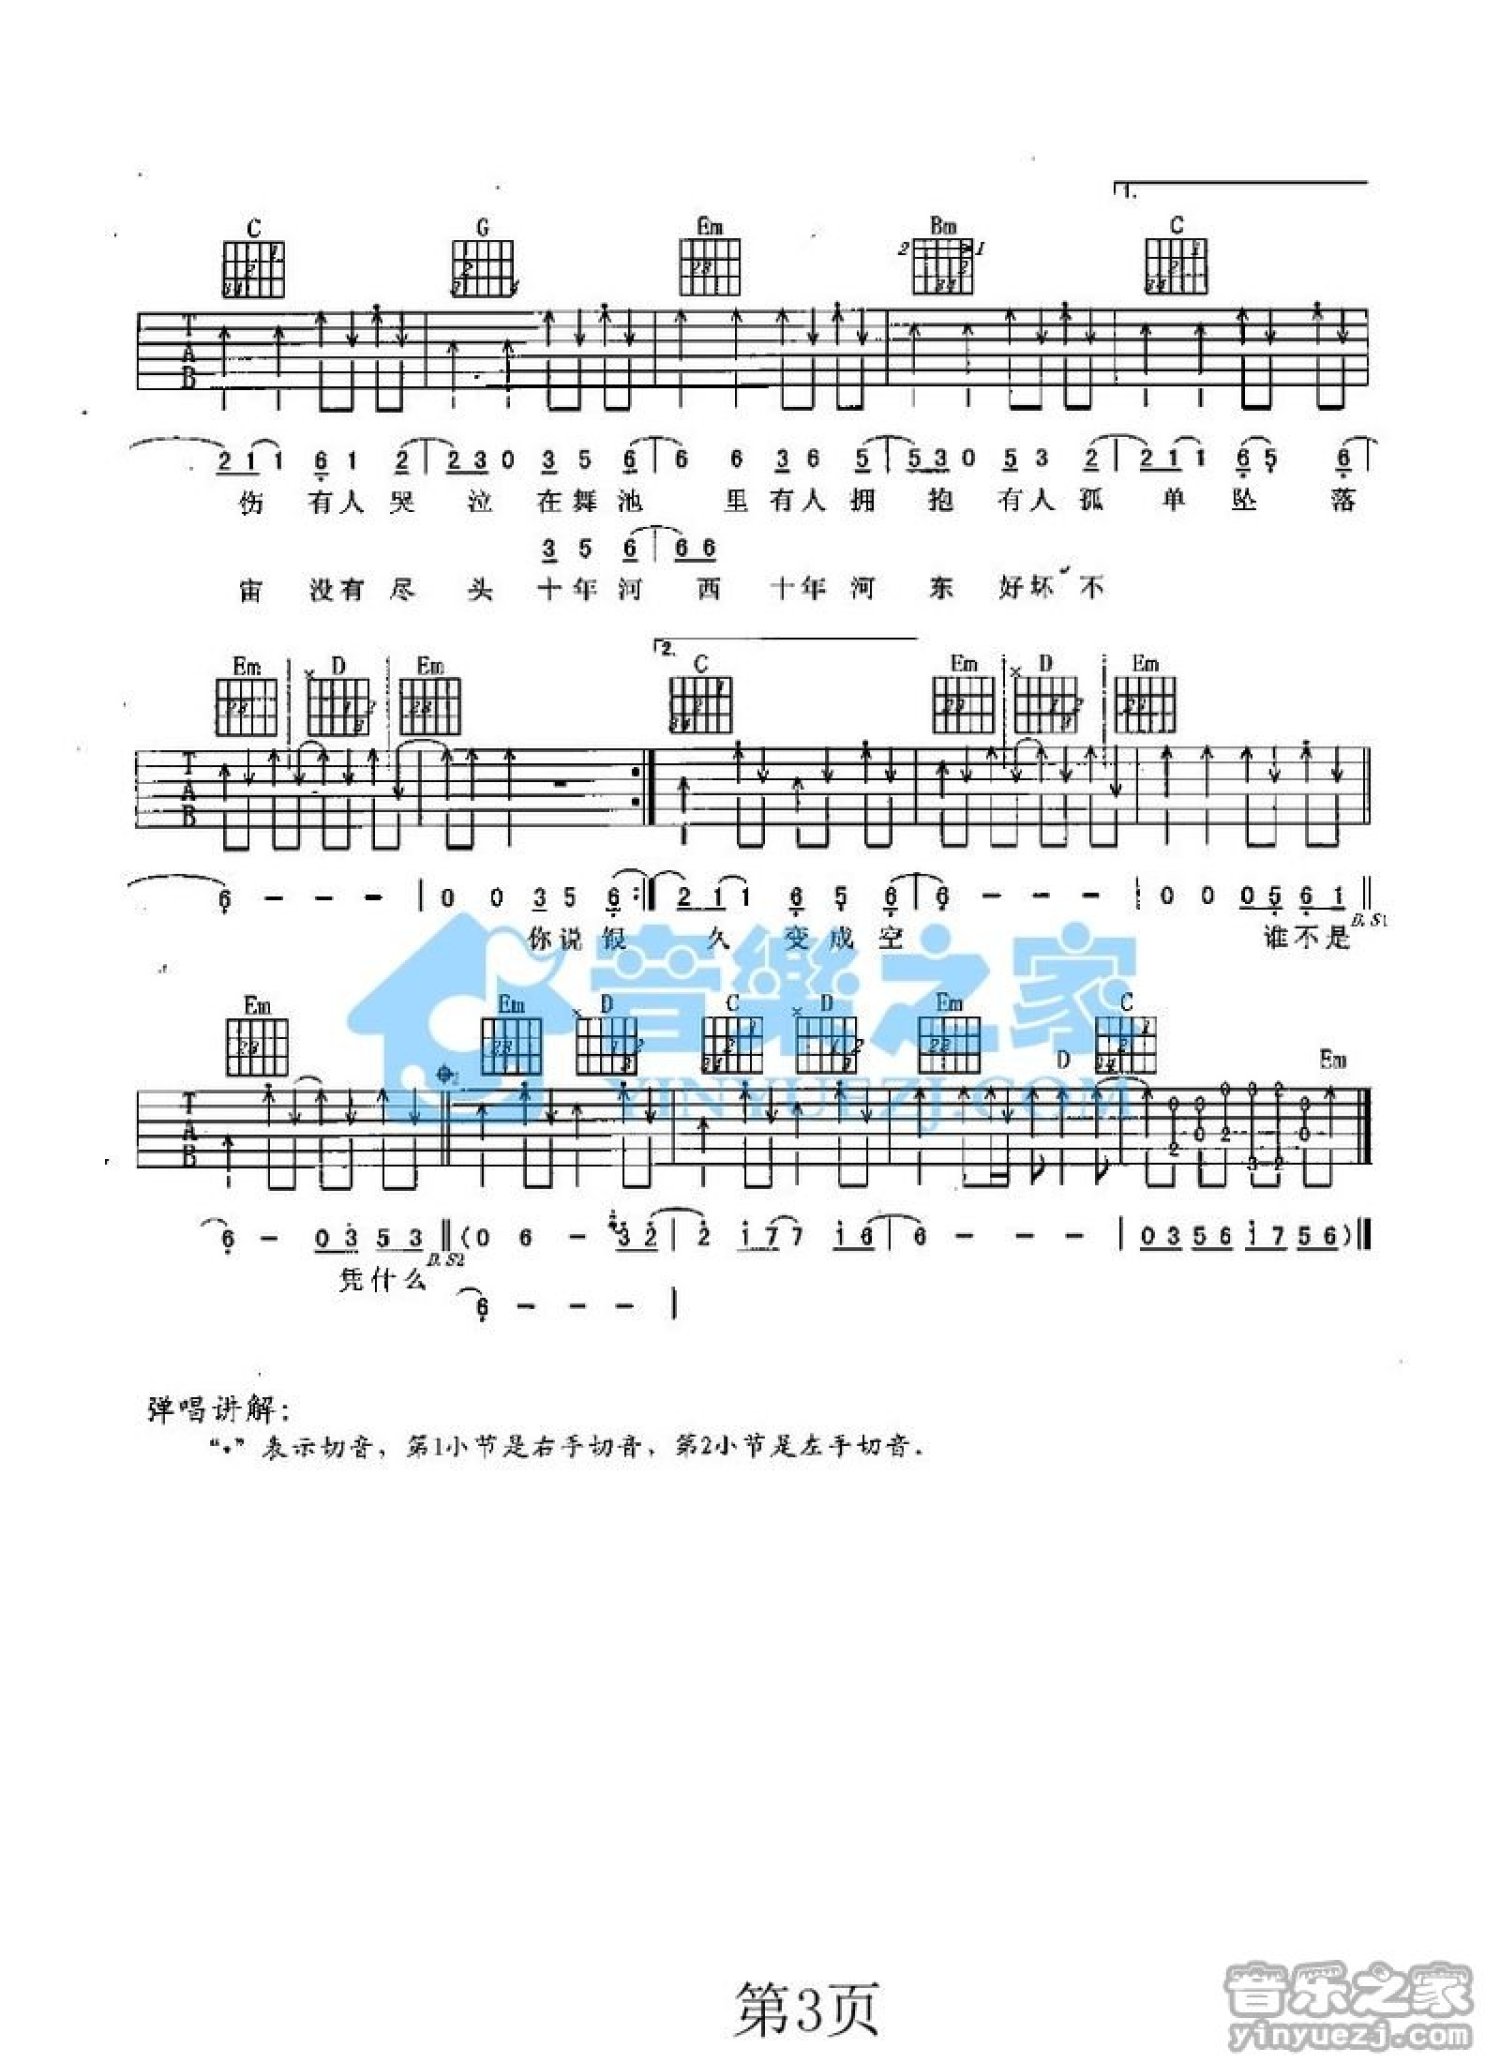 riptide吉他弹唱谱,pde吉他,pde吉他和弦(第11页)_大山谷图库